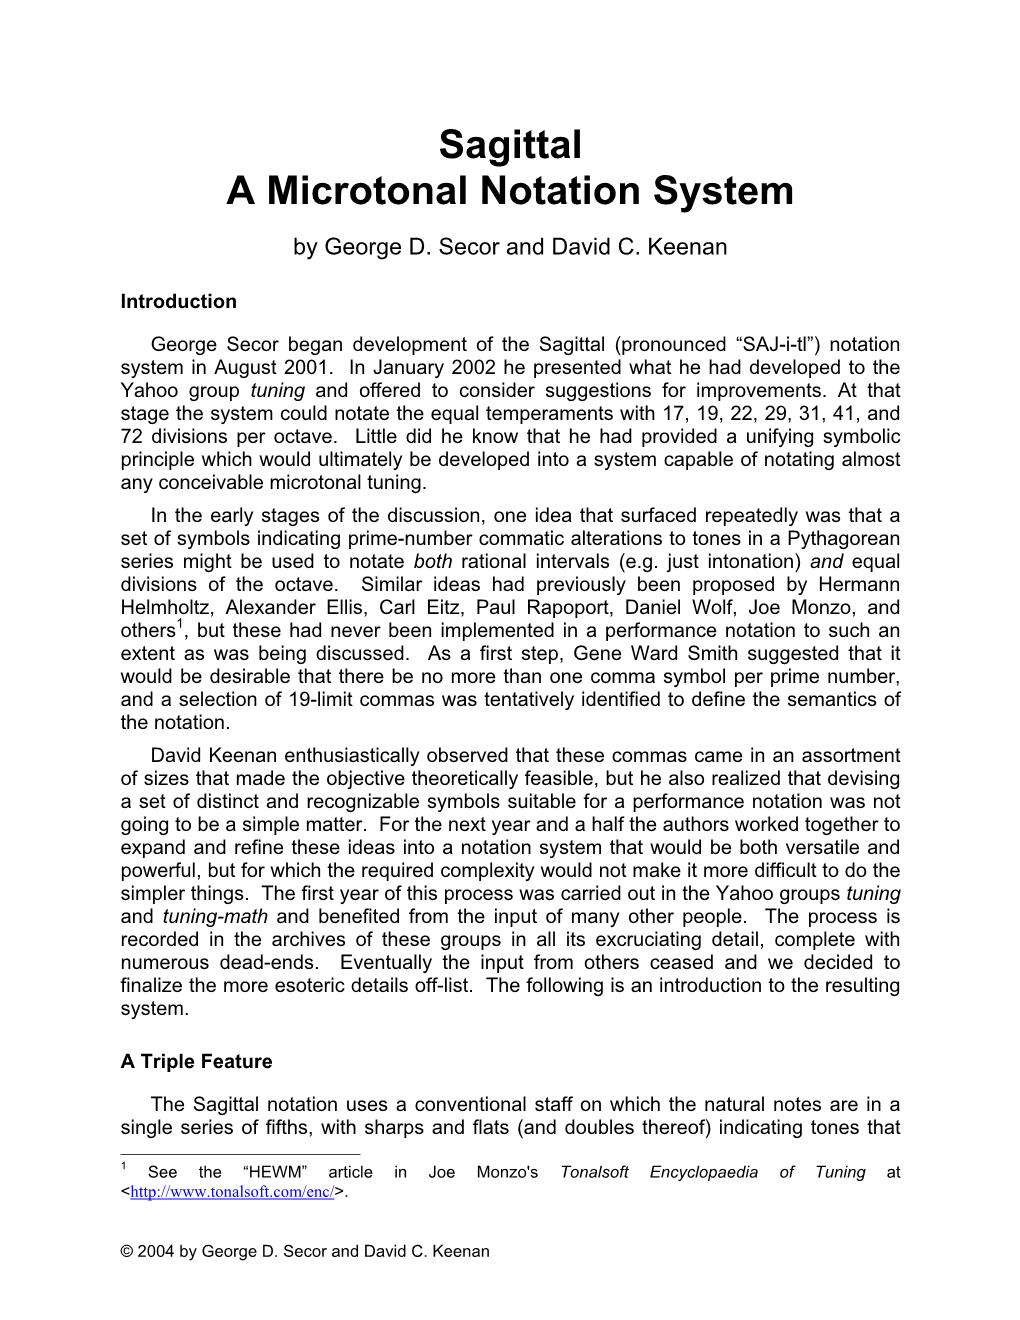 Sagittal a Microtonal Notation System